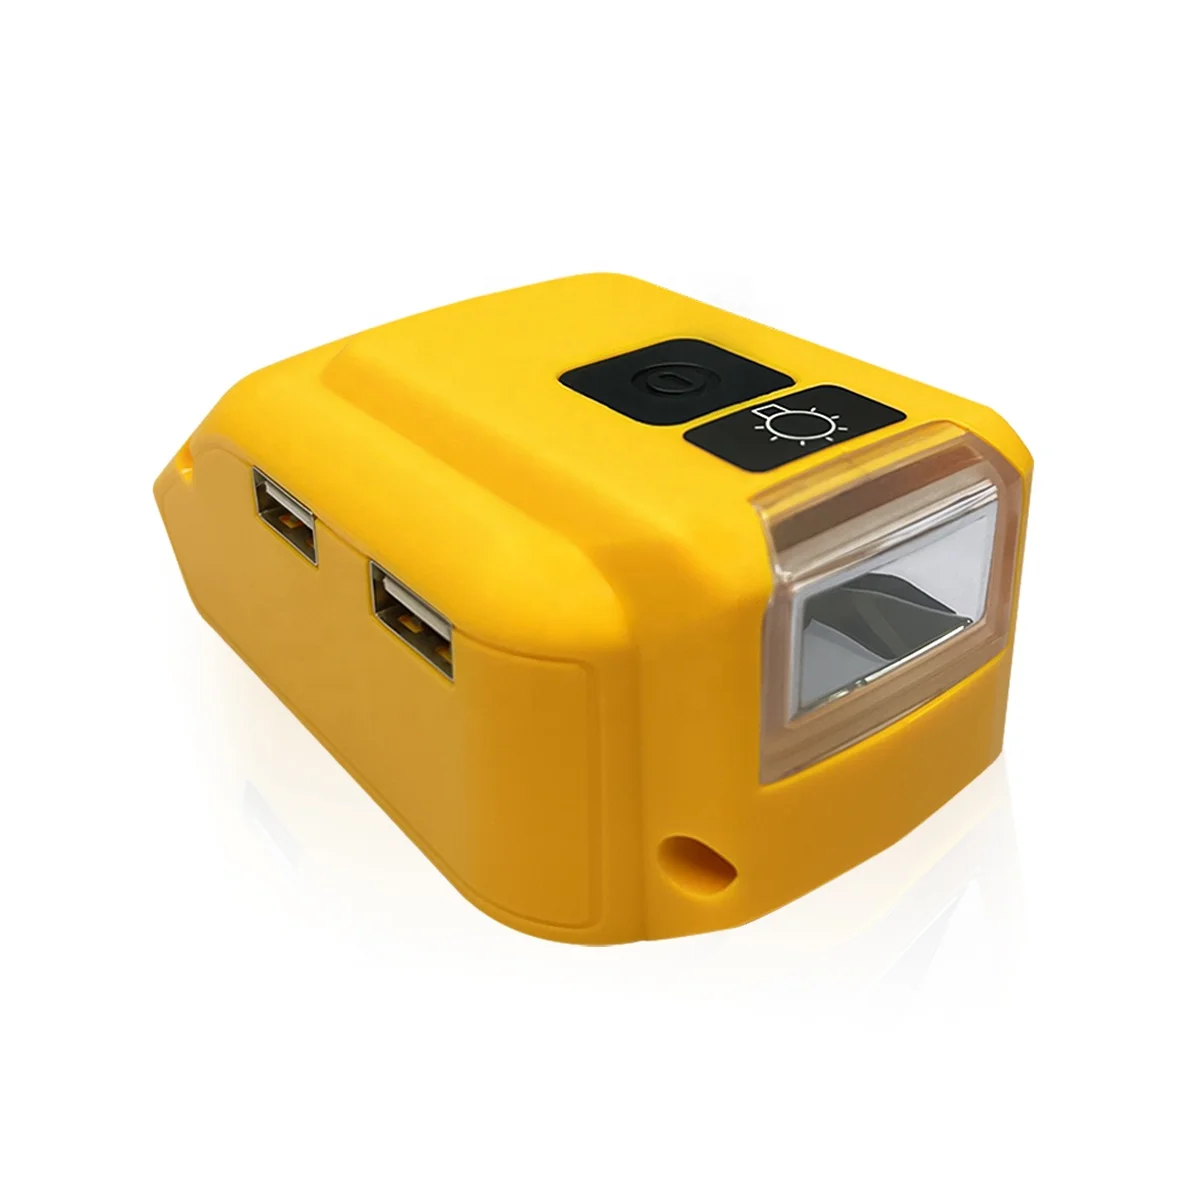 

DCB090 A901Dewalt Battery Charger Dewalt Converter Adapter Charger for Dewalt 20V Battery With LED Work Light 2xUSB Charging, Yellow